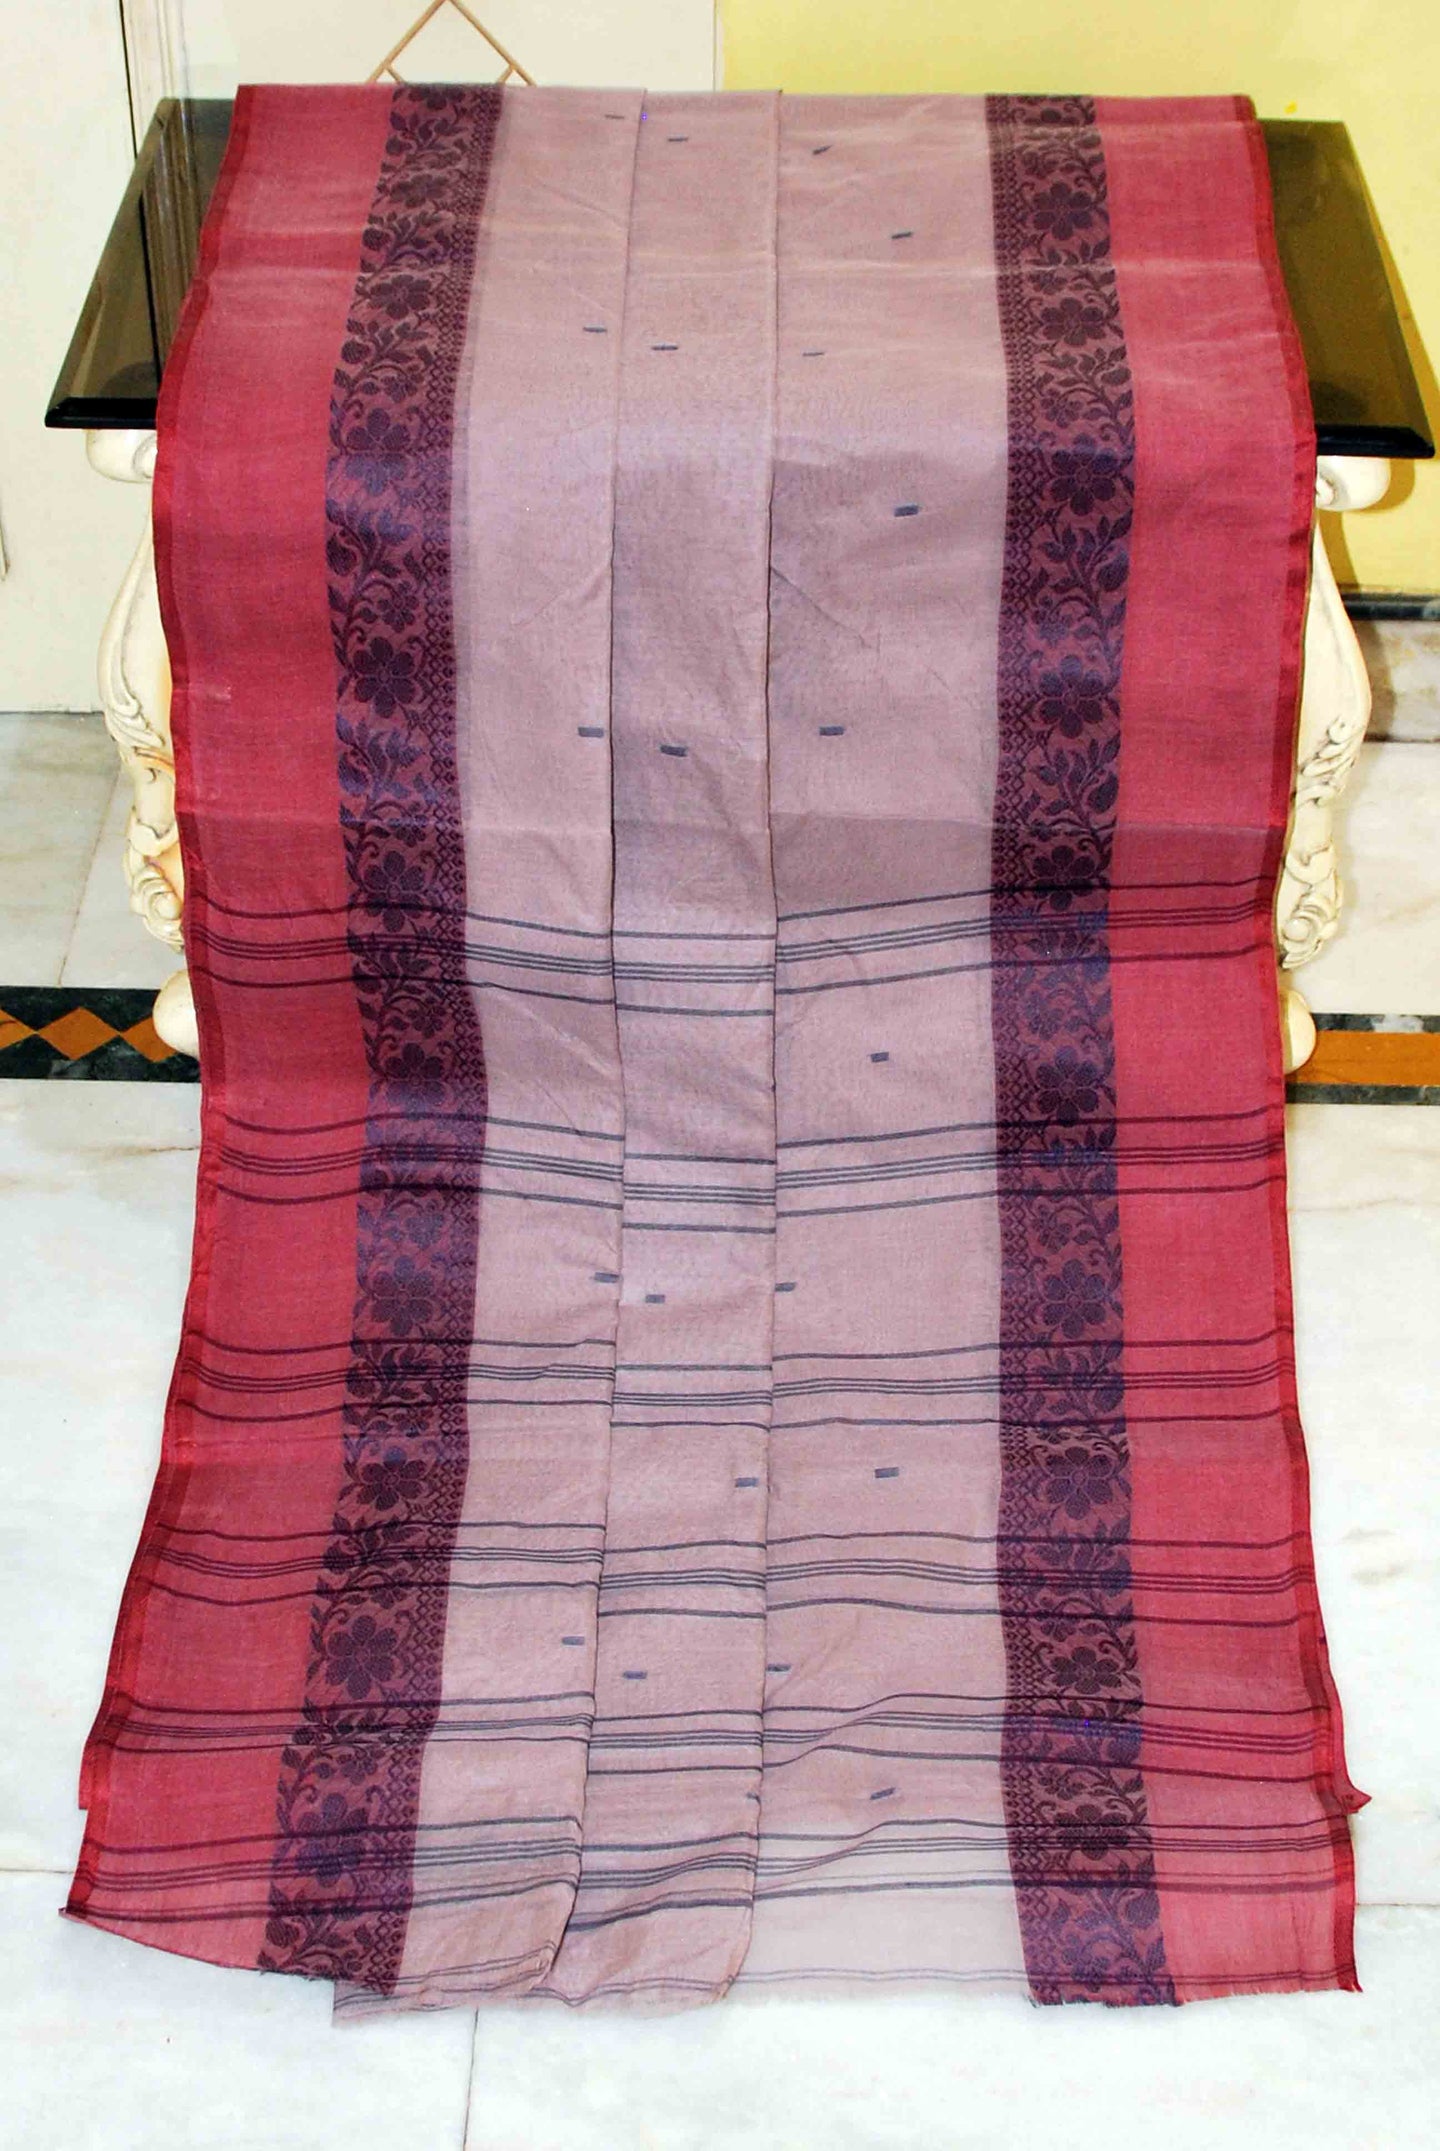 Bengal Handloom Cotton Saree in Light Purple Plum, Rosewood and Navy Blue